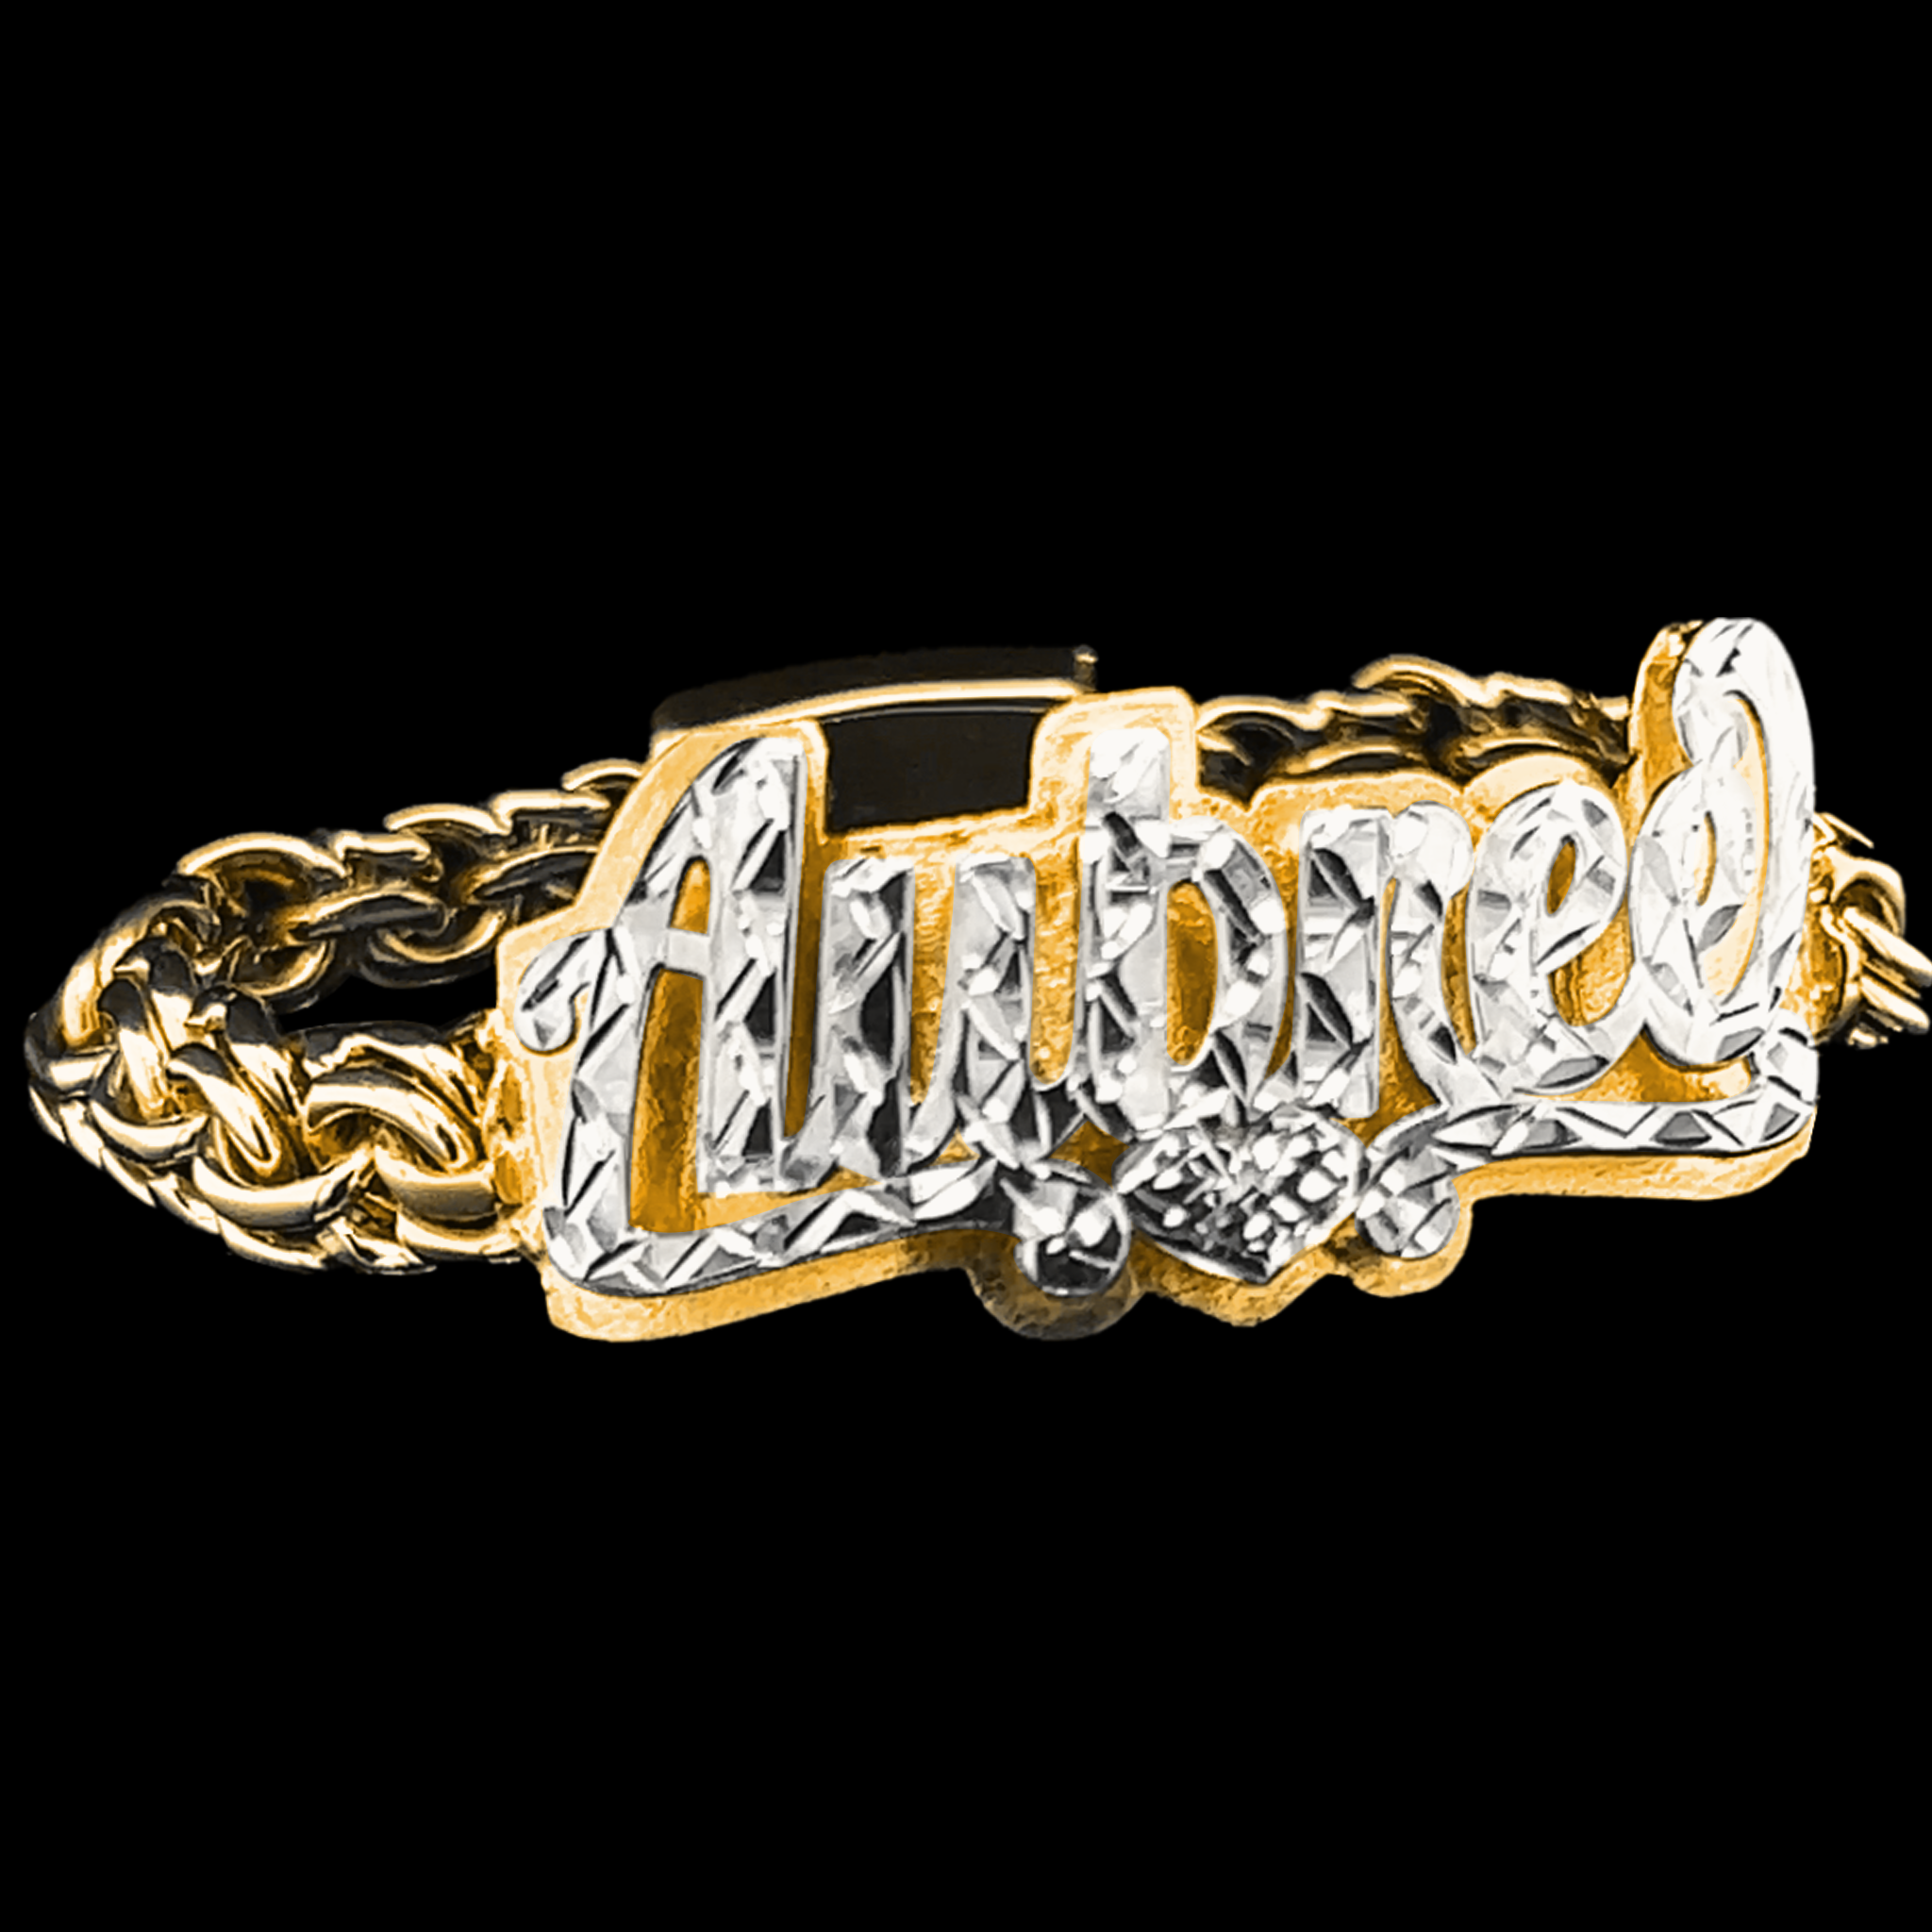 10KT Gold Women Chino Link Bracelet with Cursive Name/Esclava para Mujer 10KT Tejido Chino con Nombre Cursiva